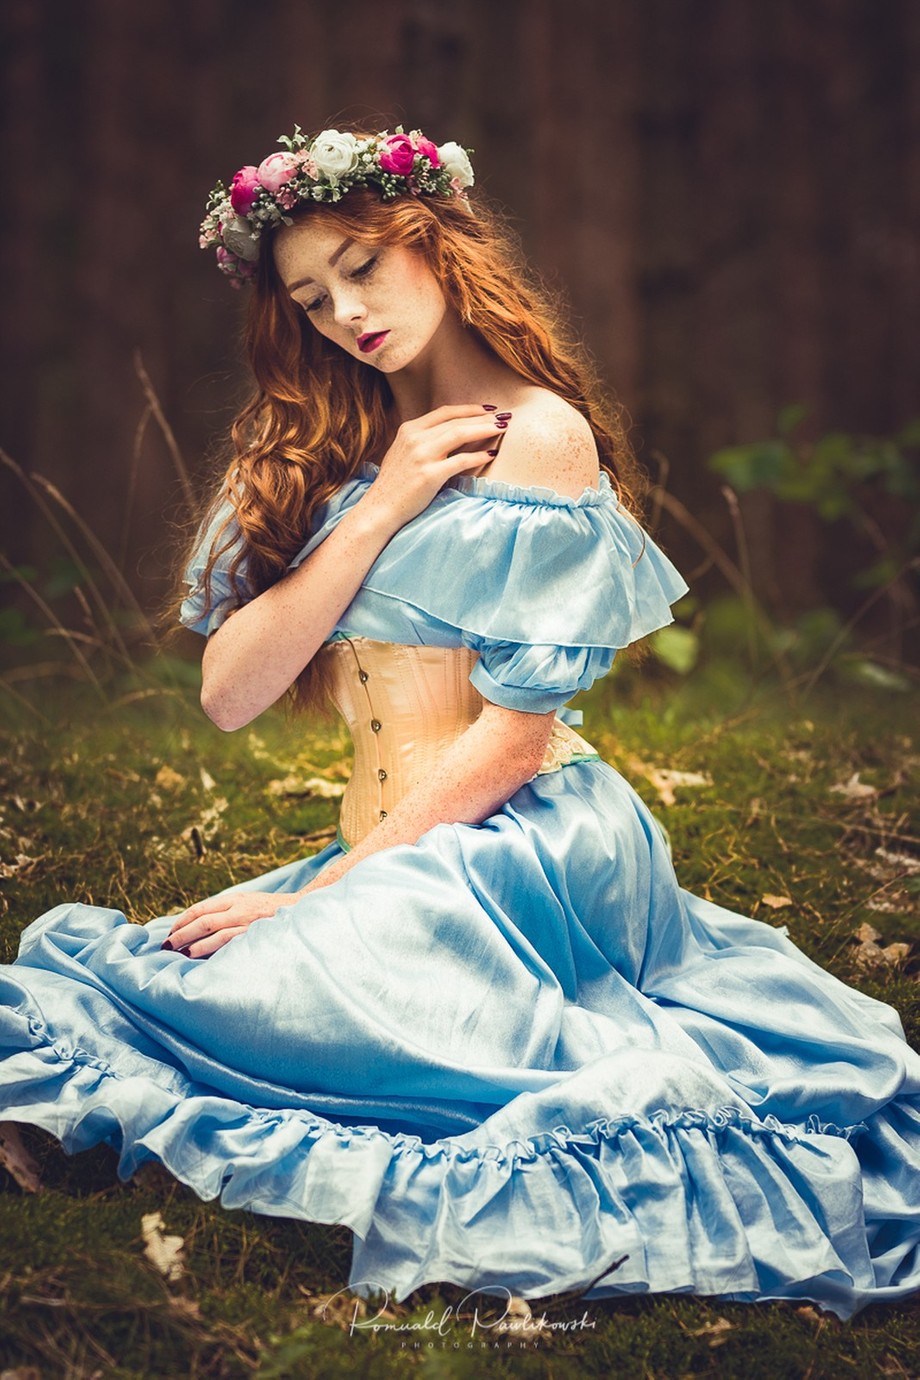 Lady in Blue by RPawlikowski - Fairytale Portraiture Photo Contest